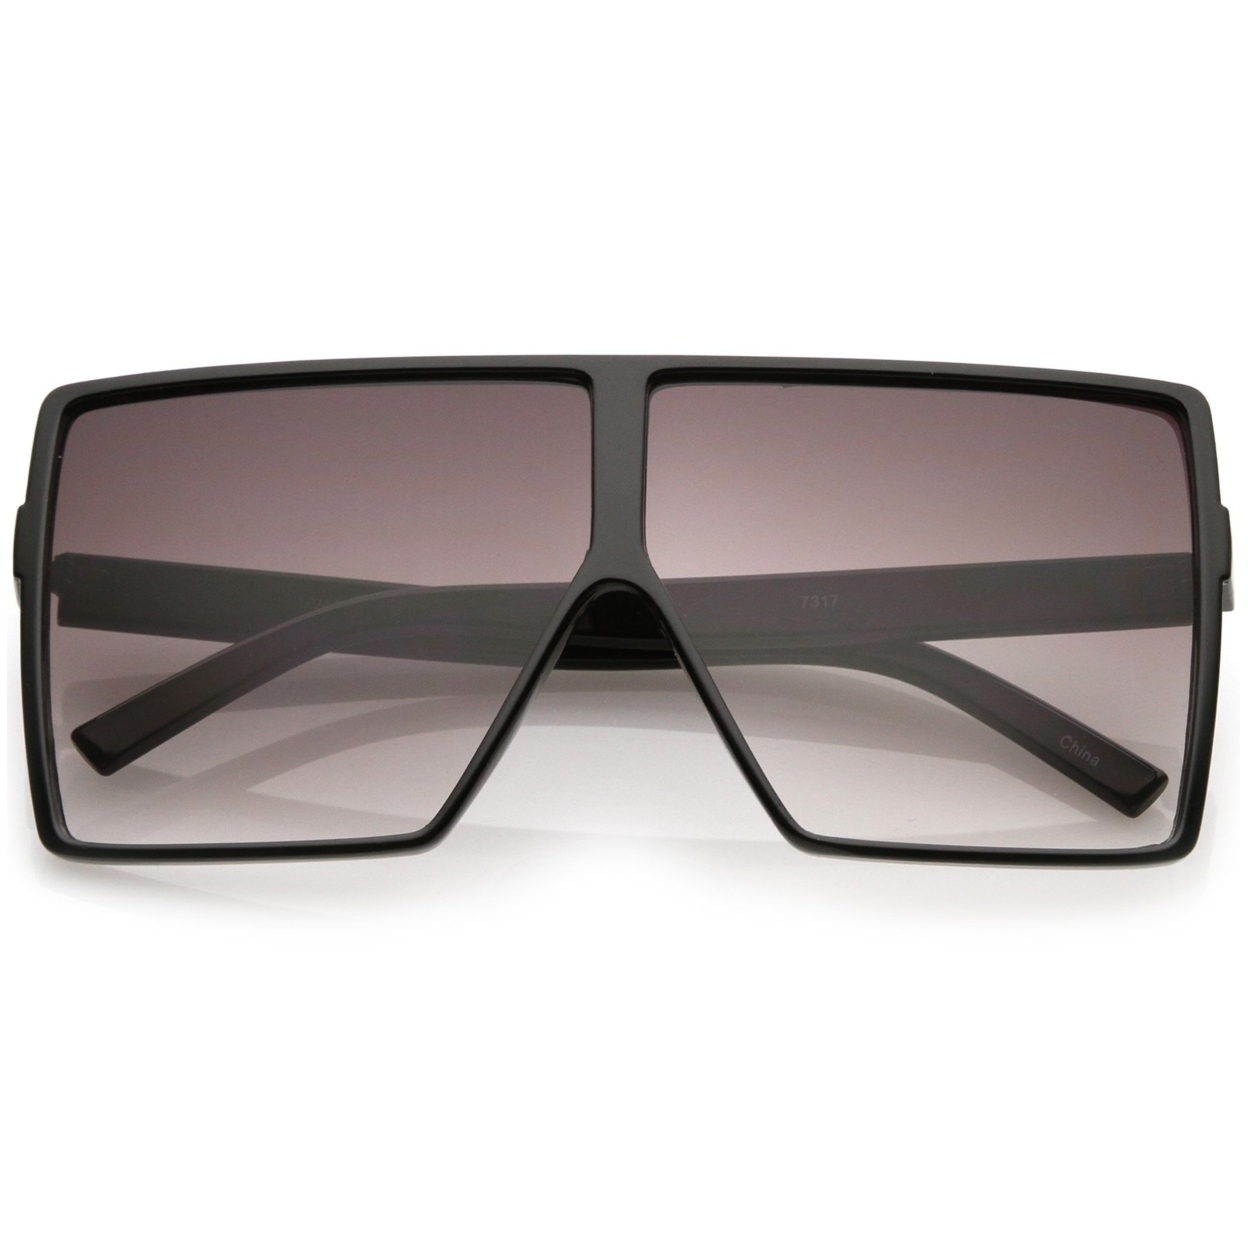 Super Oversize Square Sunglasses Flat Top Neutral Color Flat Lens 69mm - Black Clear / Smoke